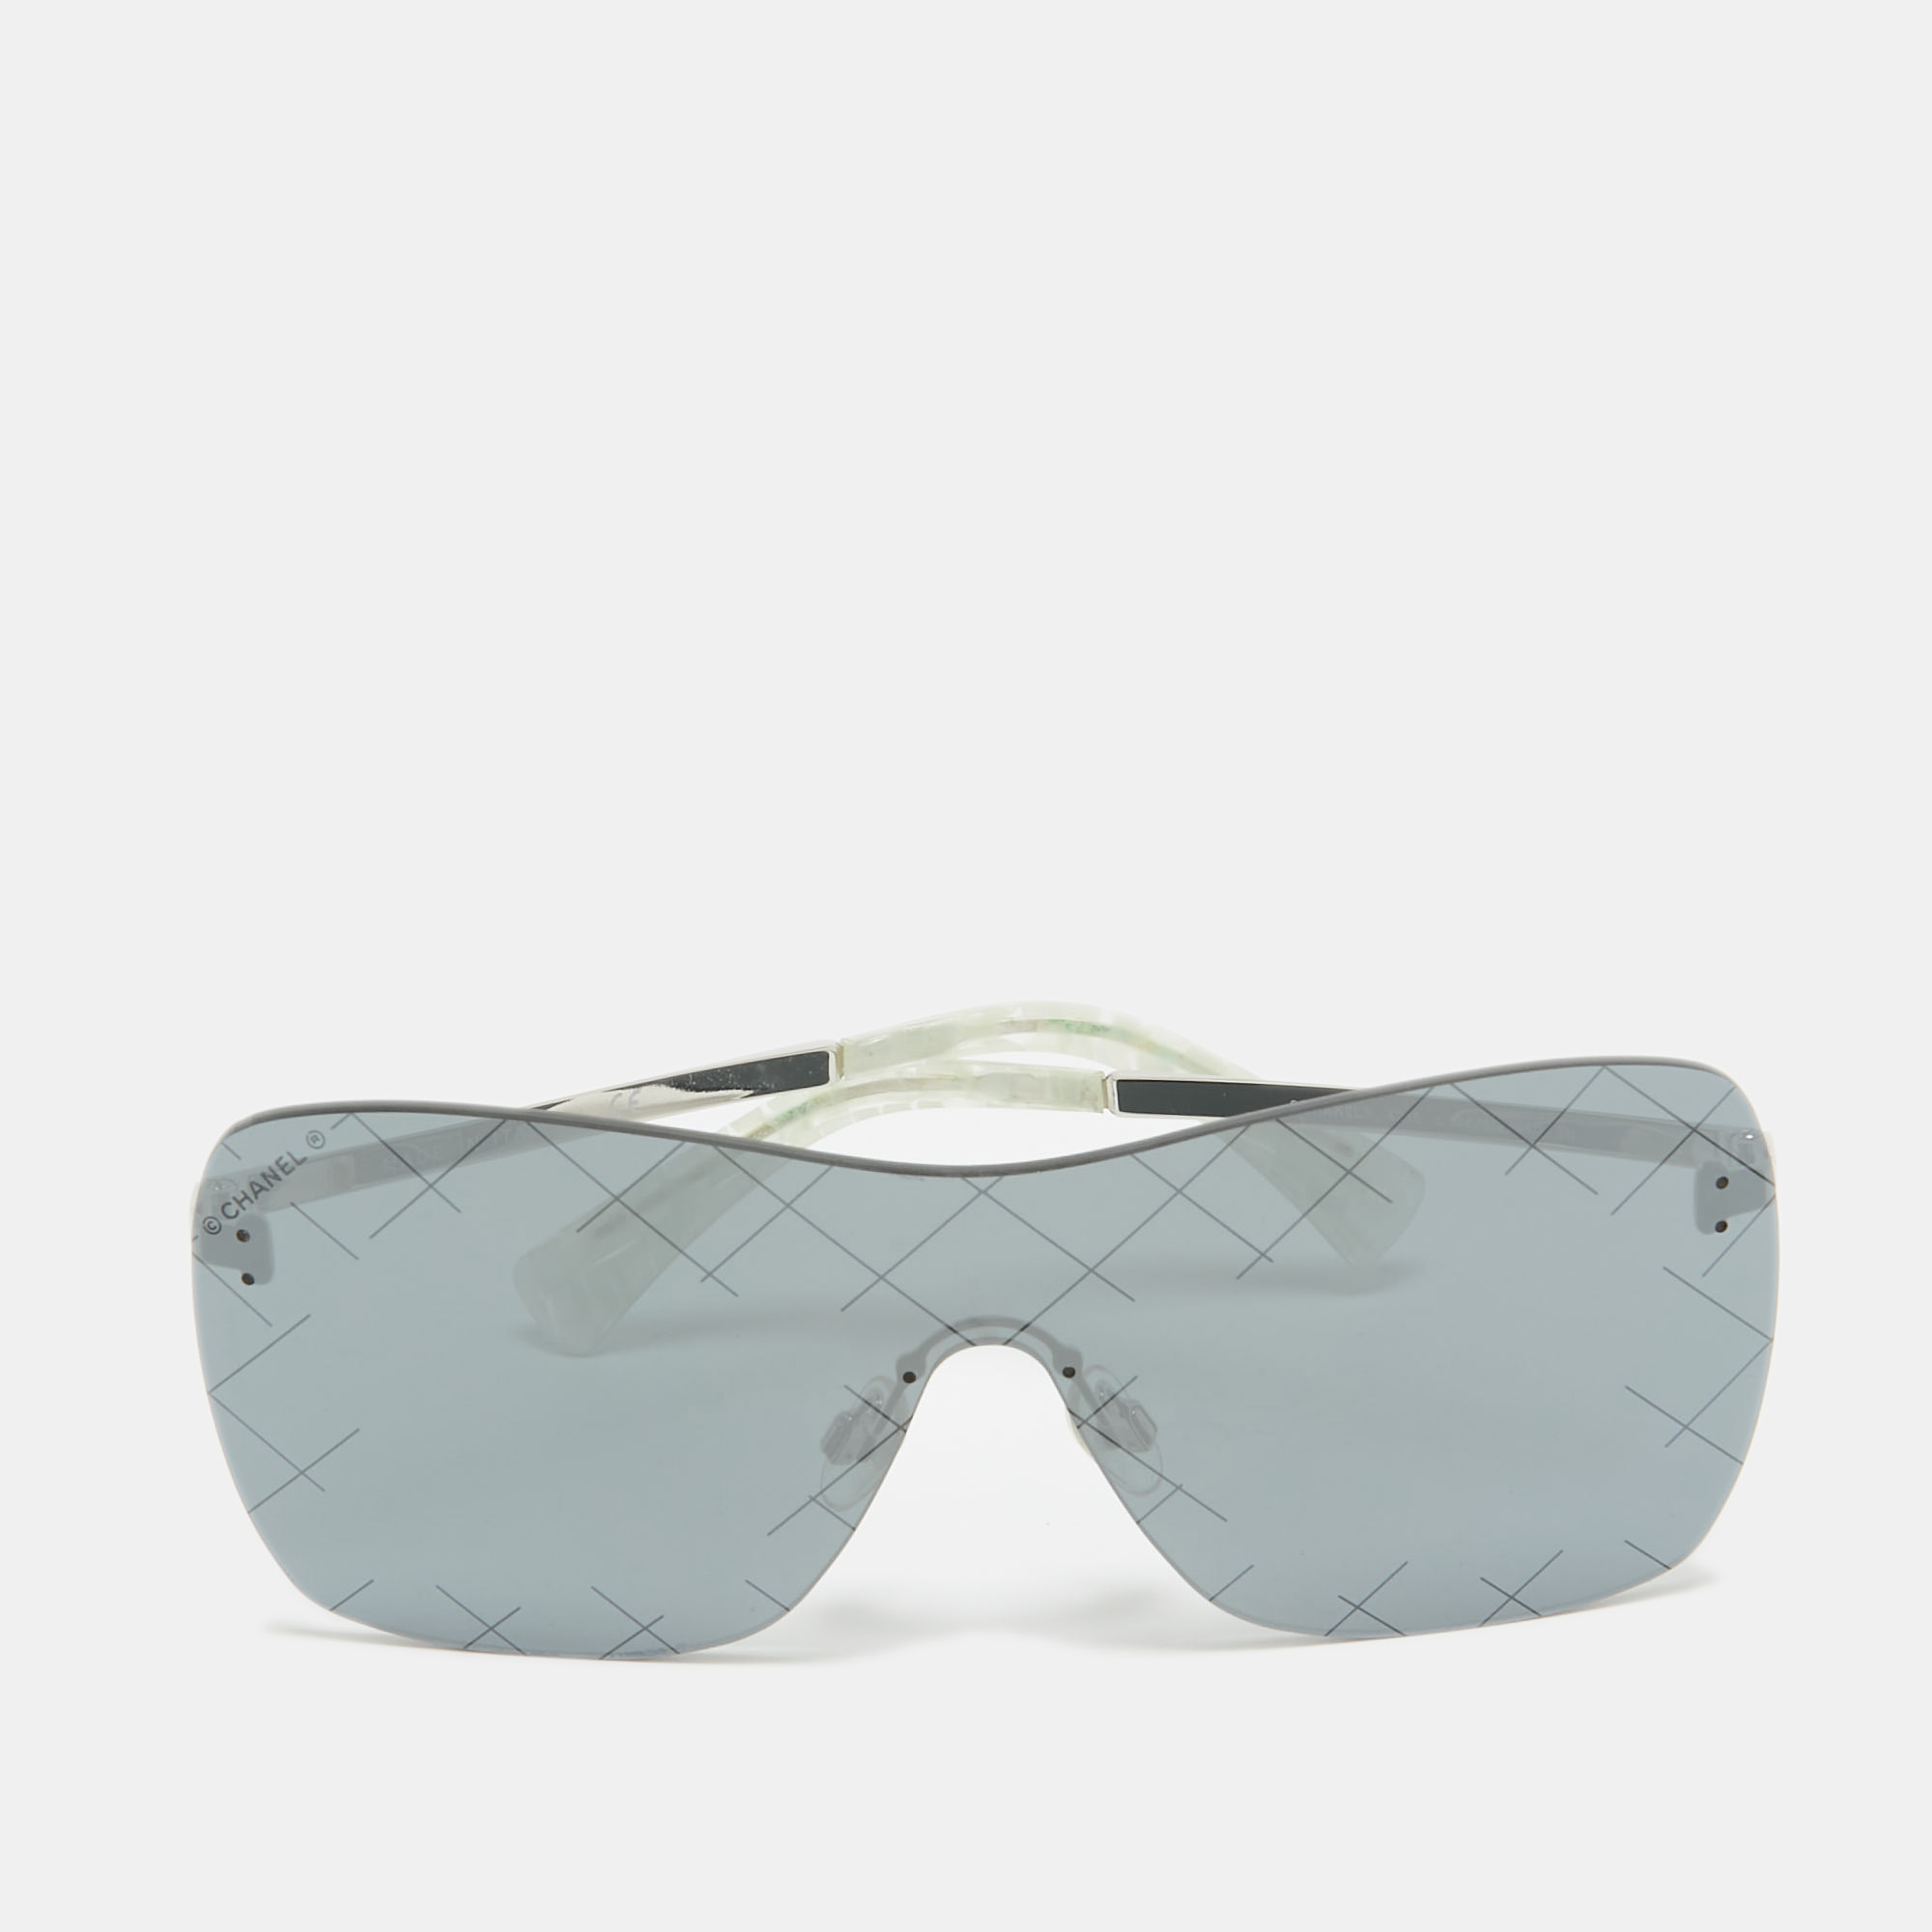 Chanel black/silver 4215 runway shield sunglasses